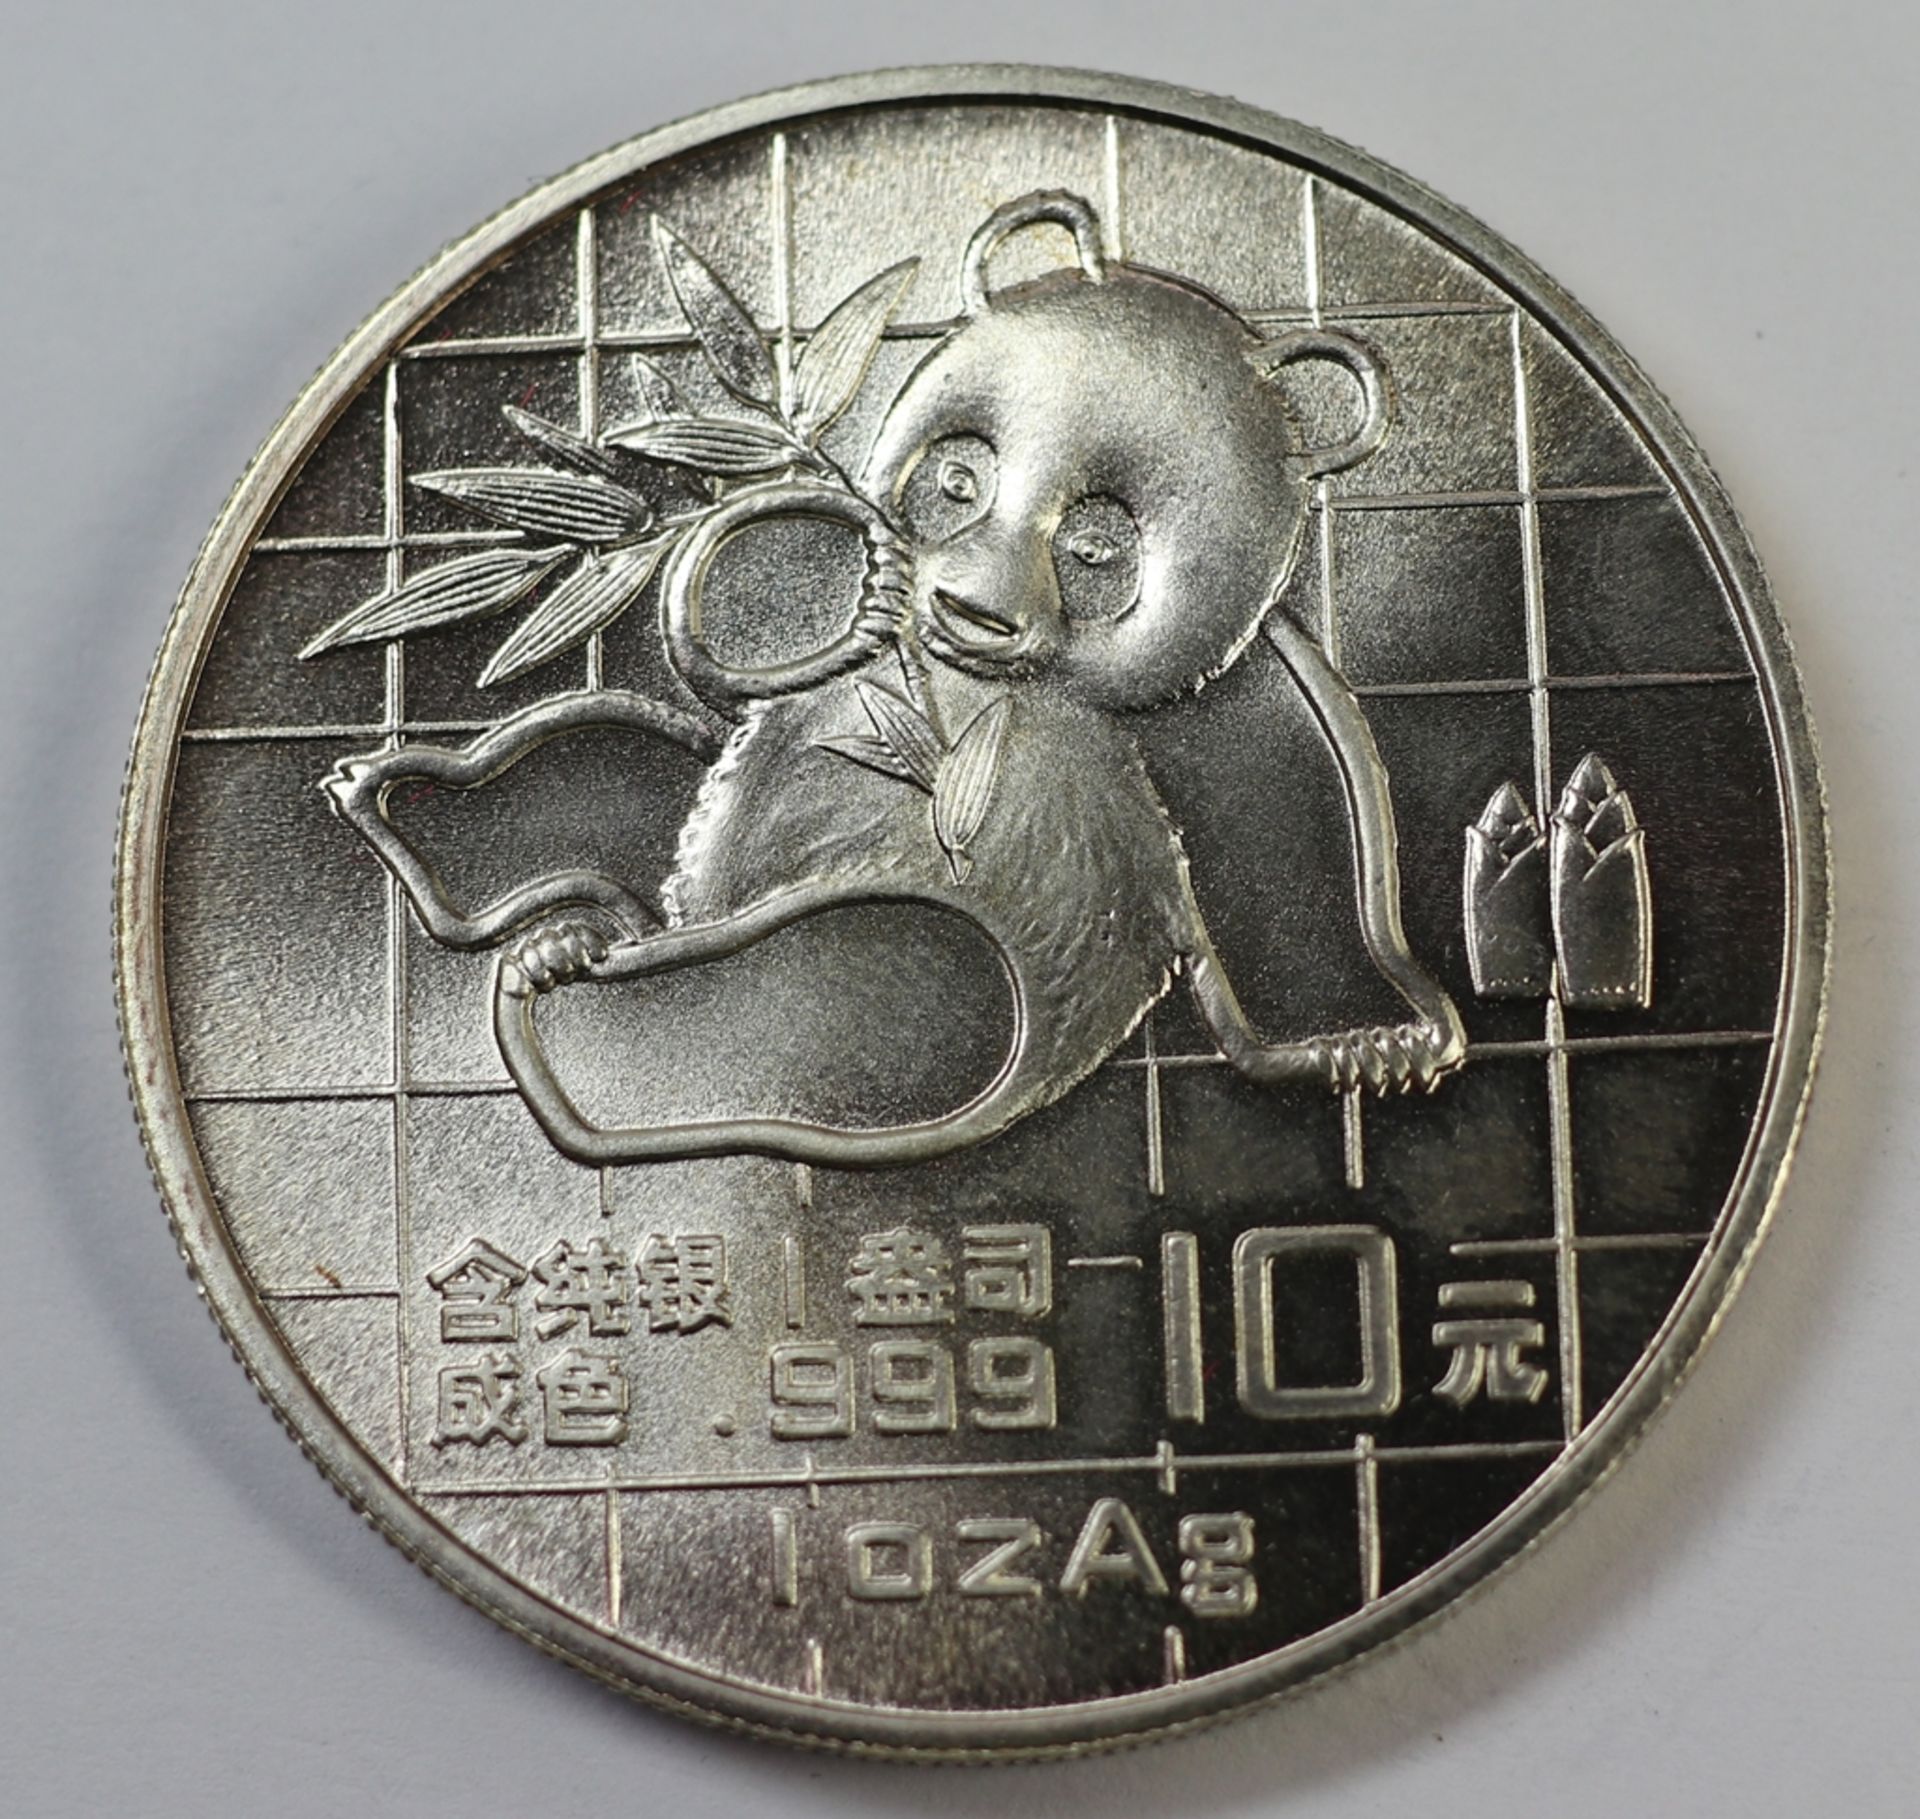 10 Yuan, China Panda in Kapsel 1oz, 1989